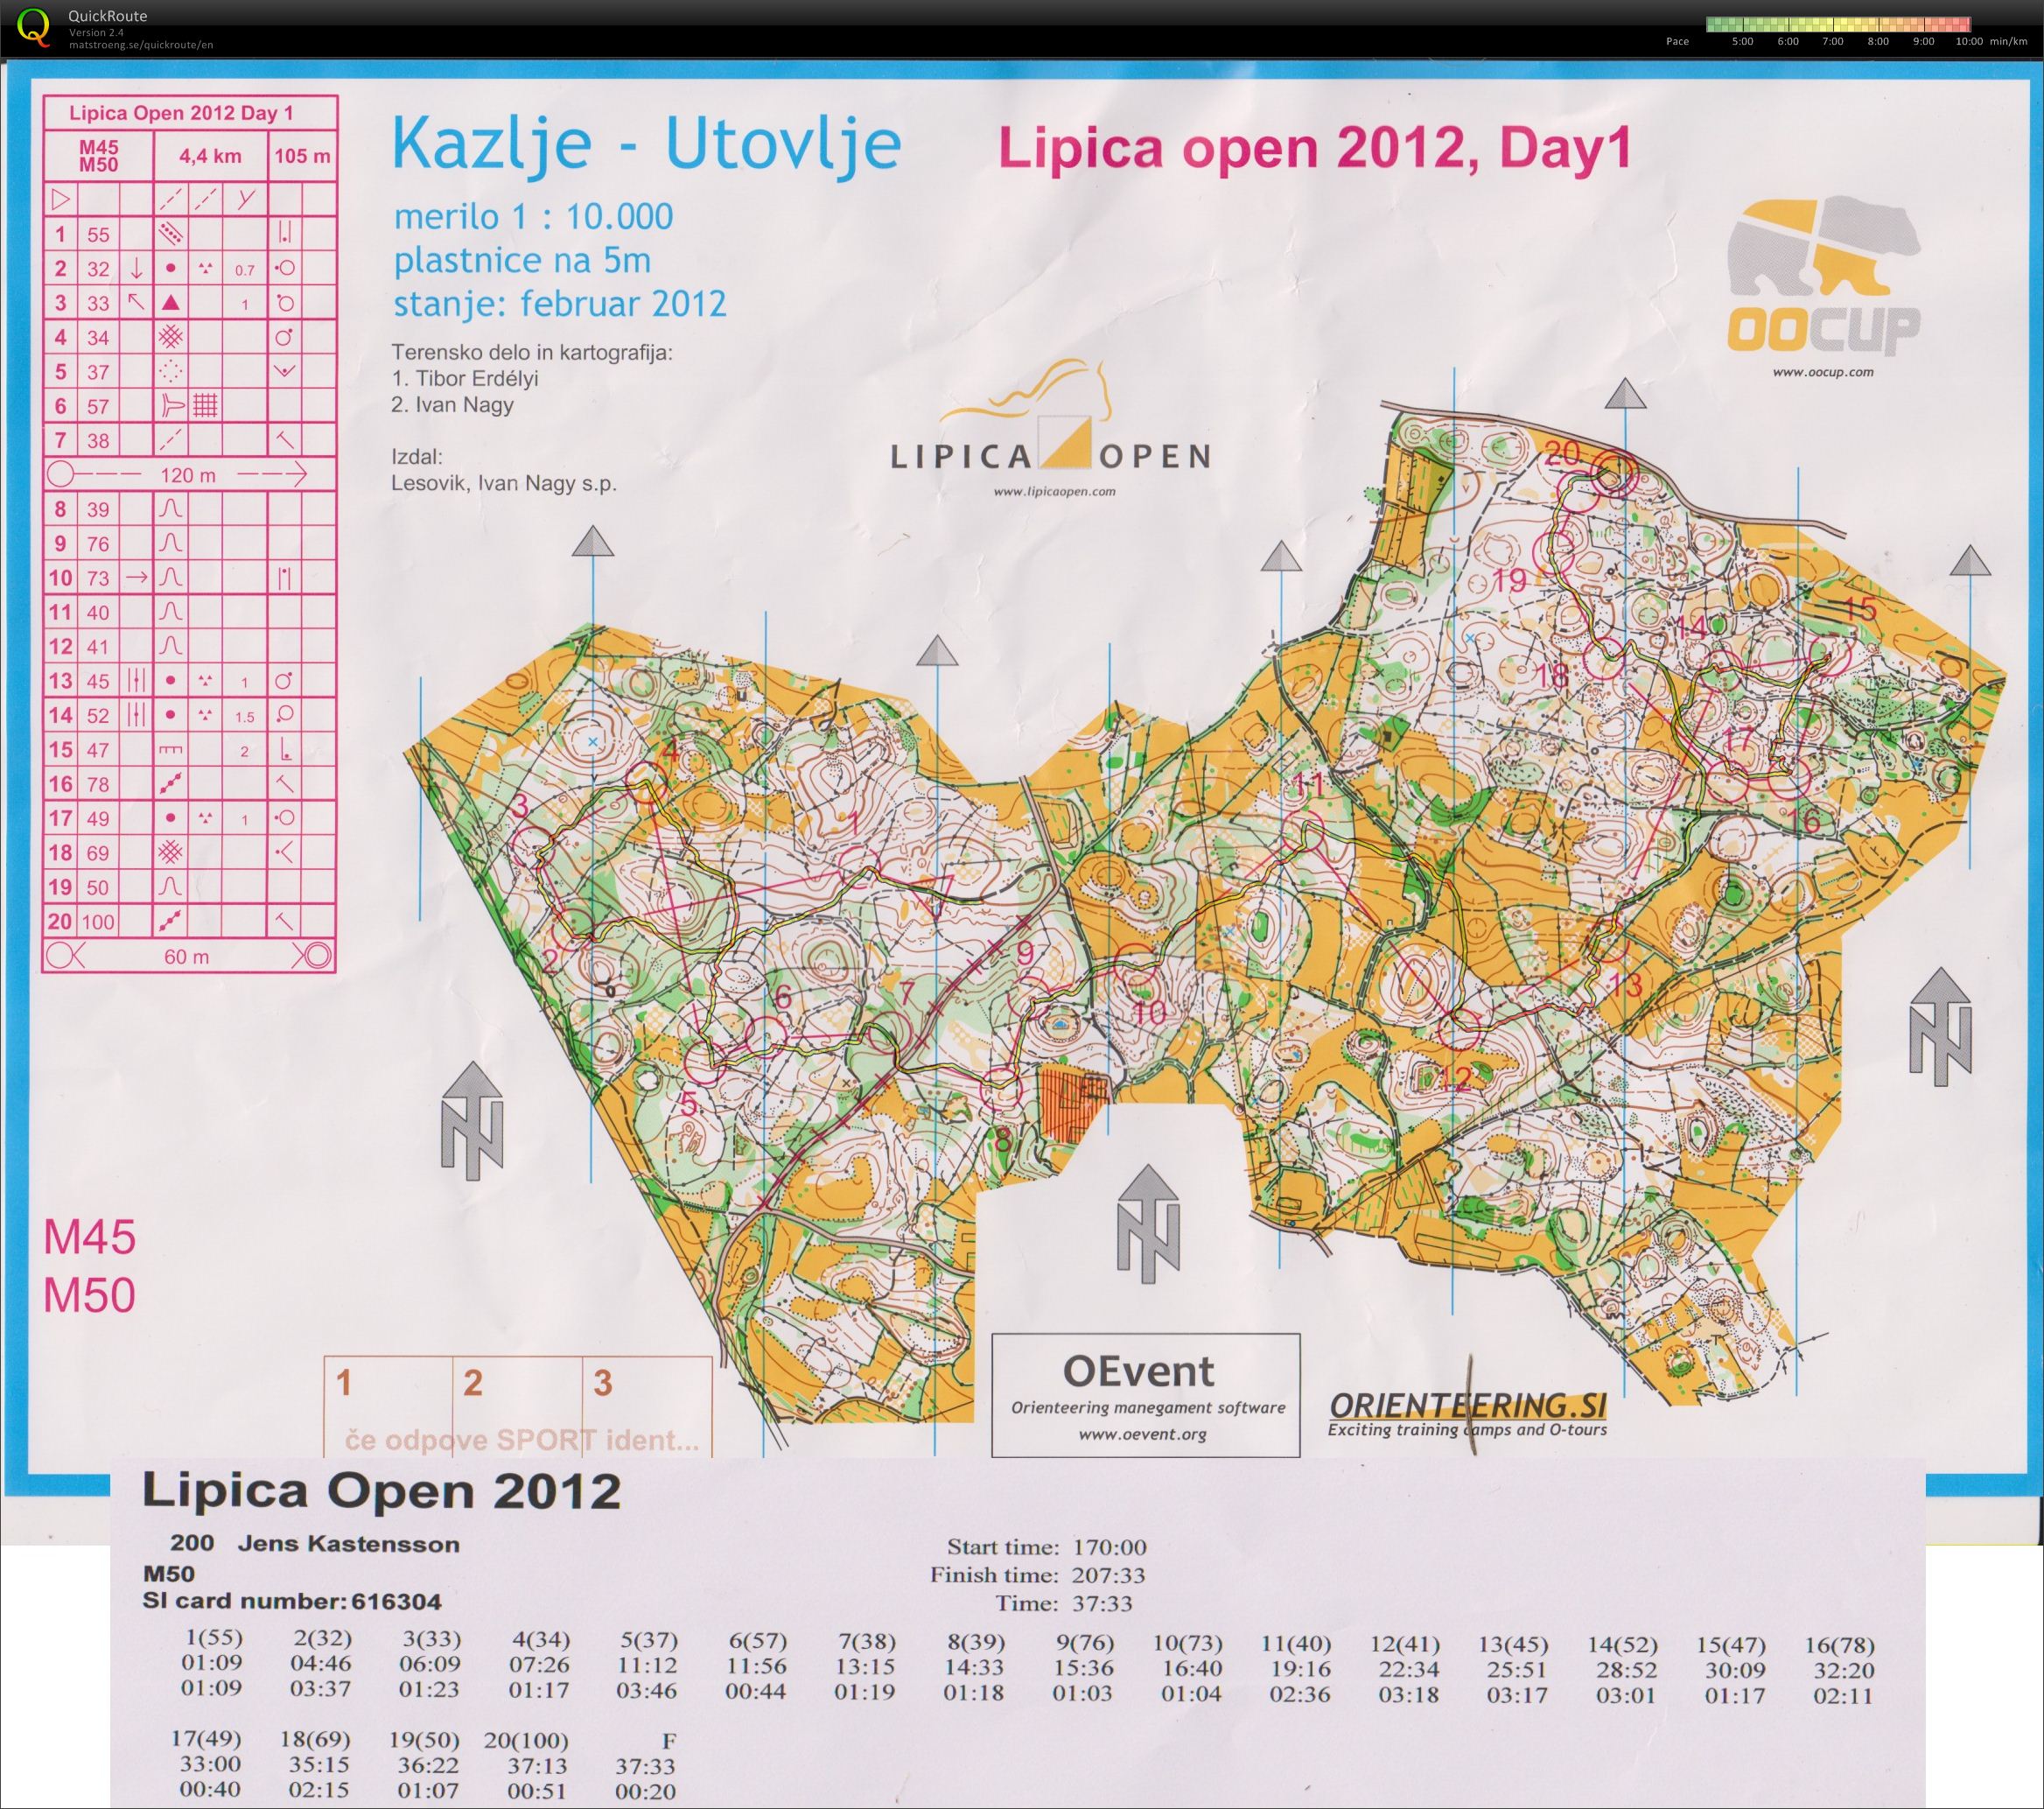 Lipica Open Day1 M50 (2012-03-10)